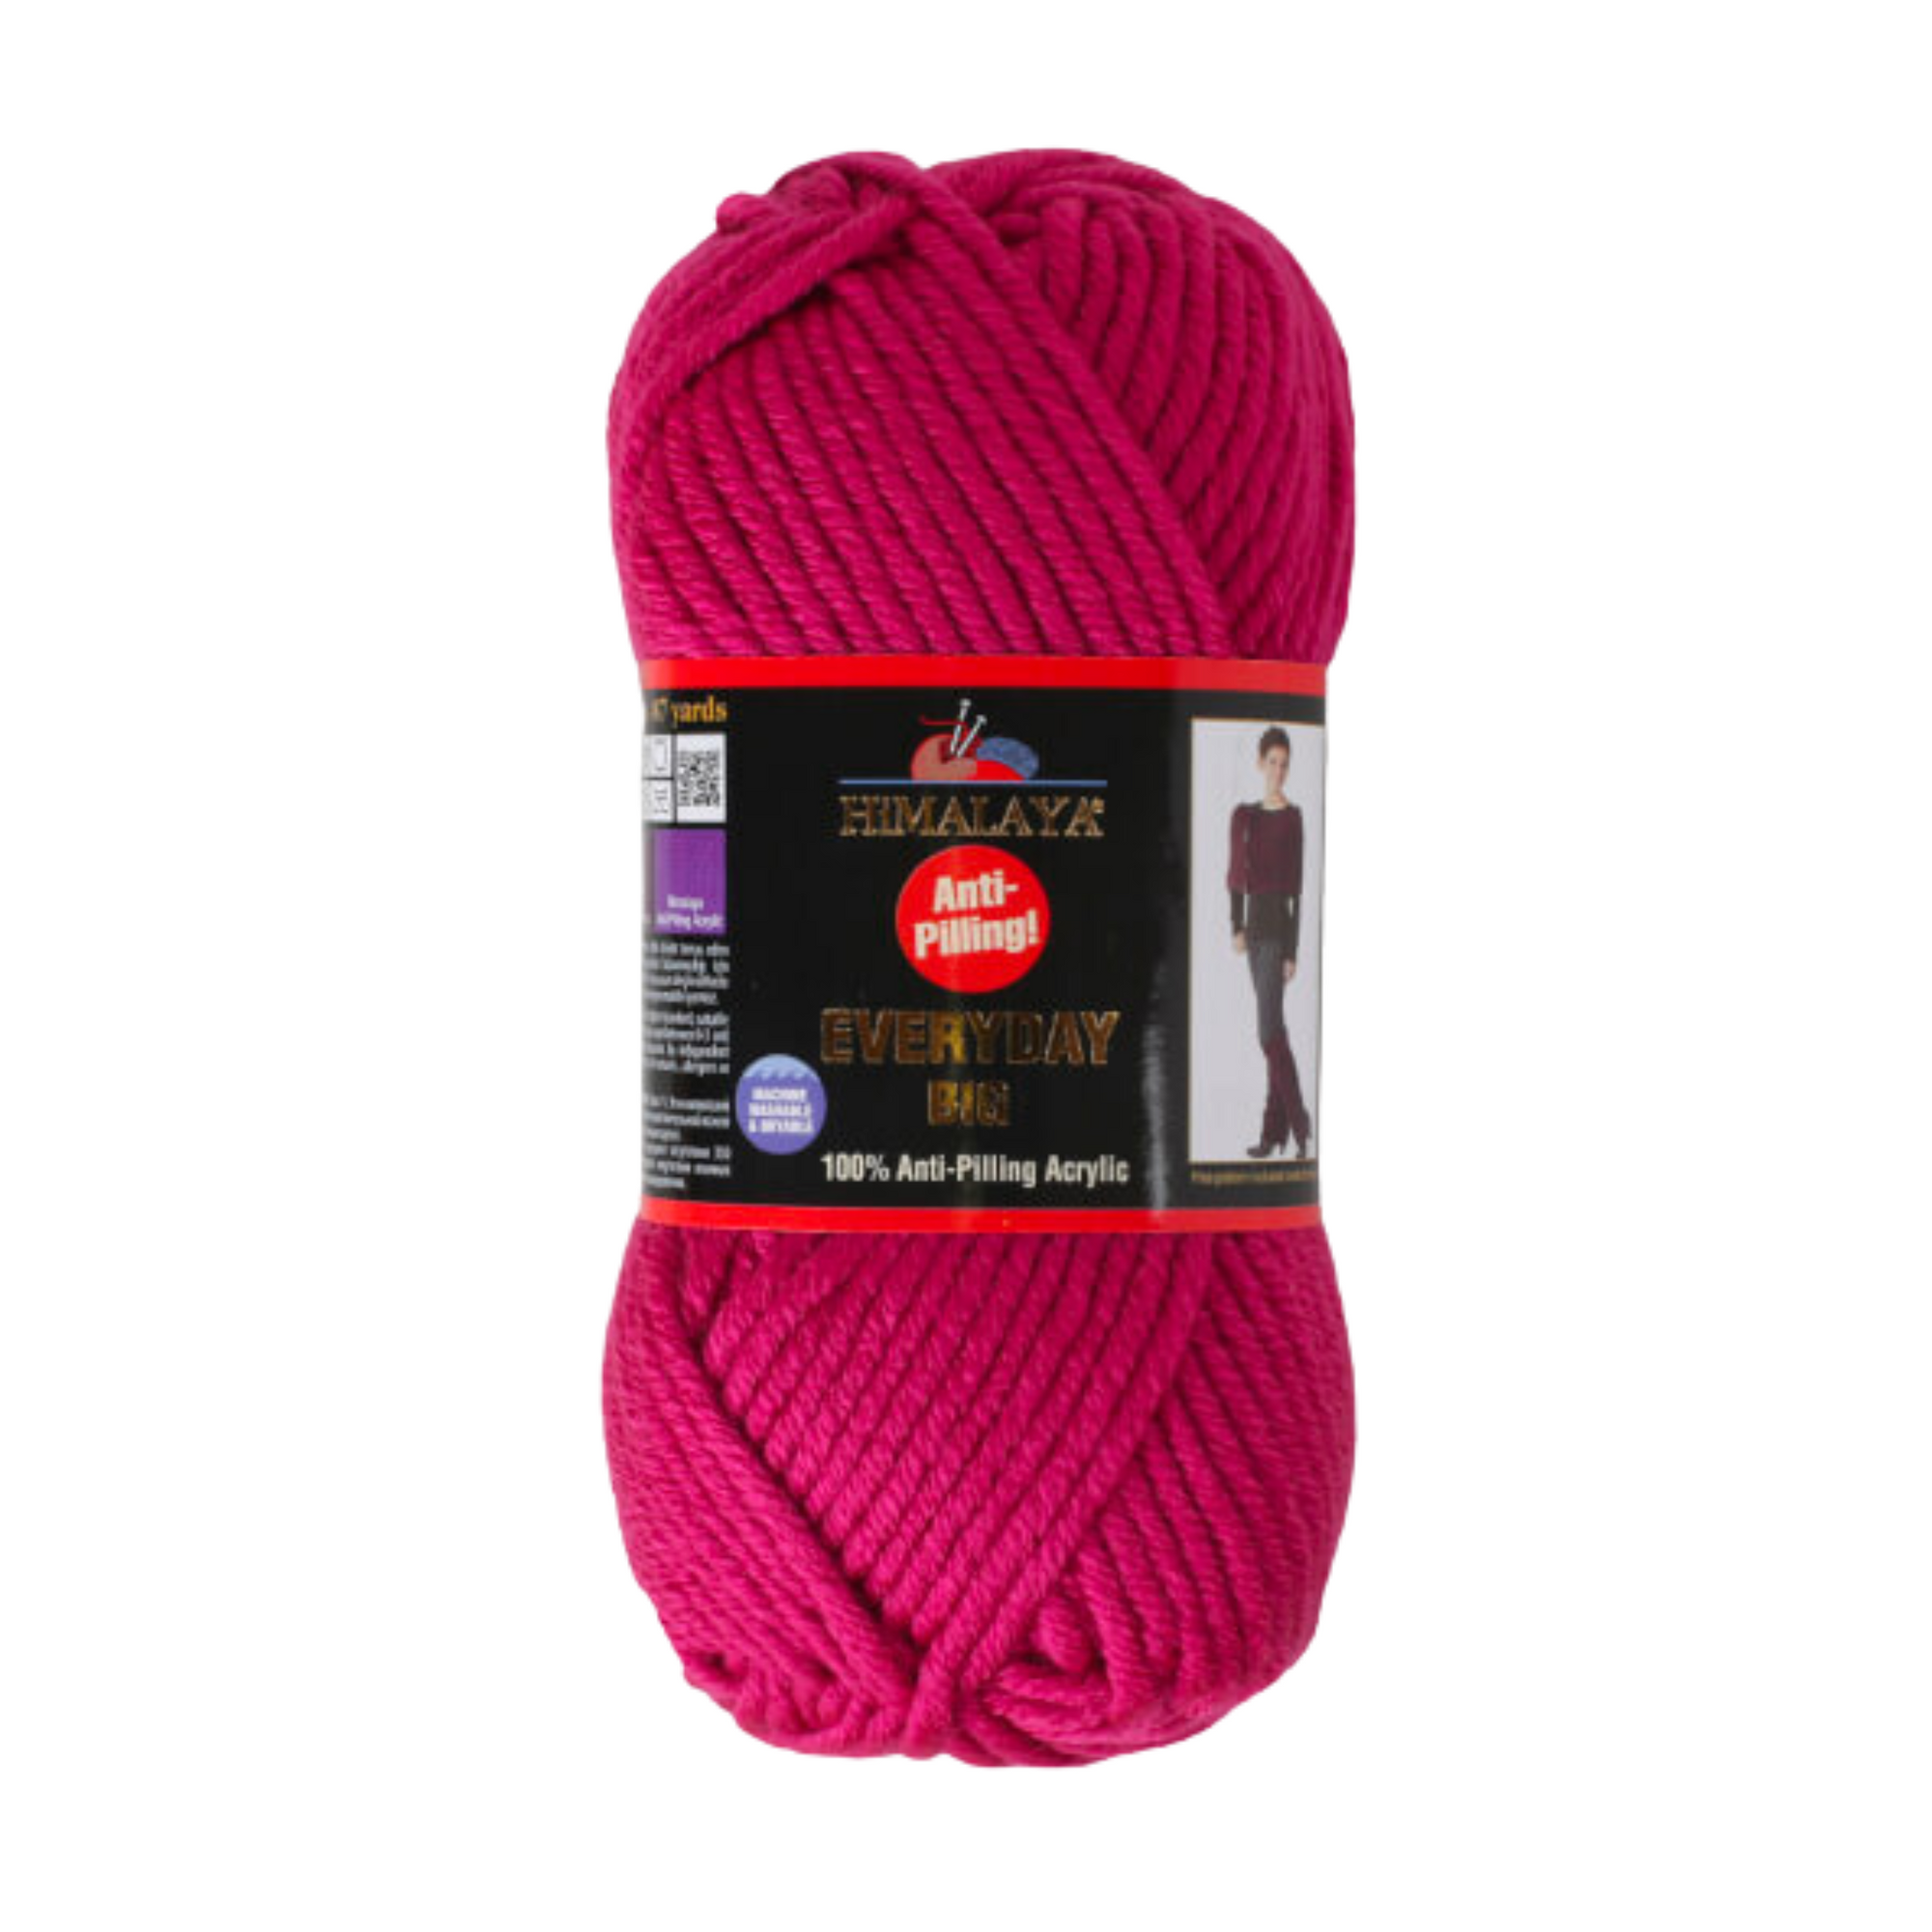 Himalaya Everyday 100% Anti-Pilling Acrylic Yarn,  Dark Red - 70815